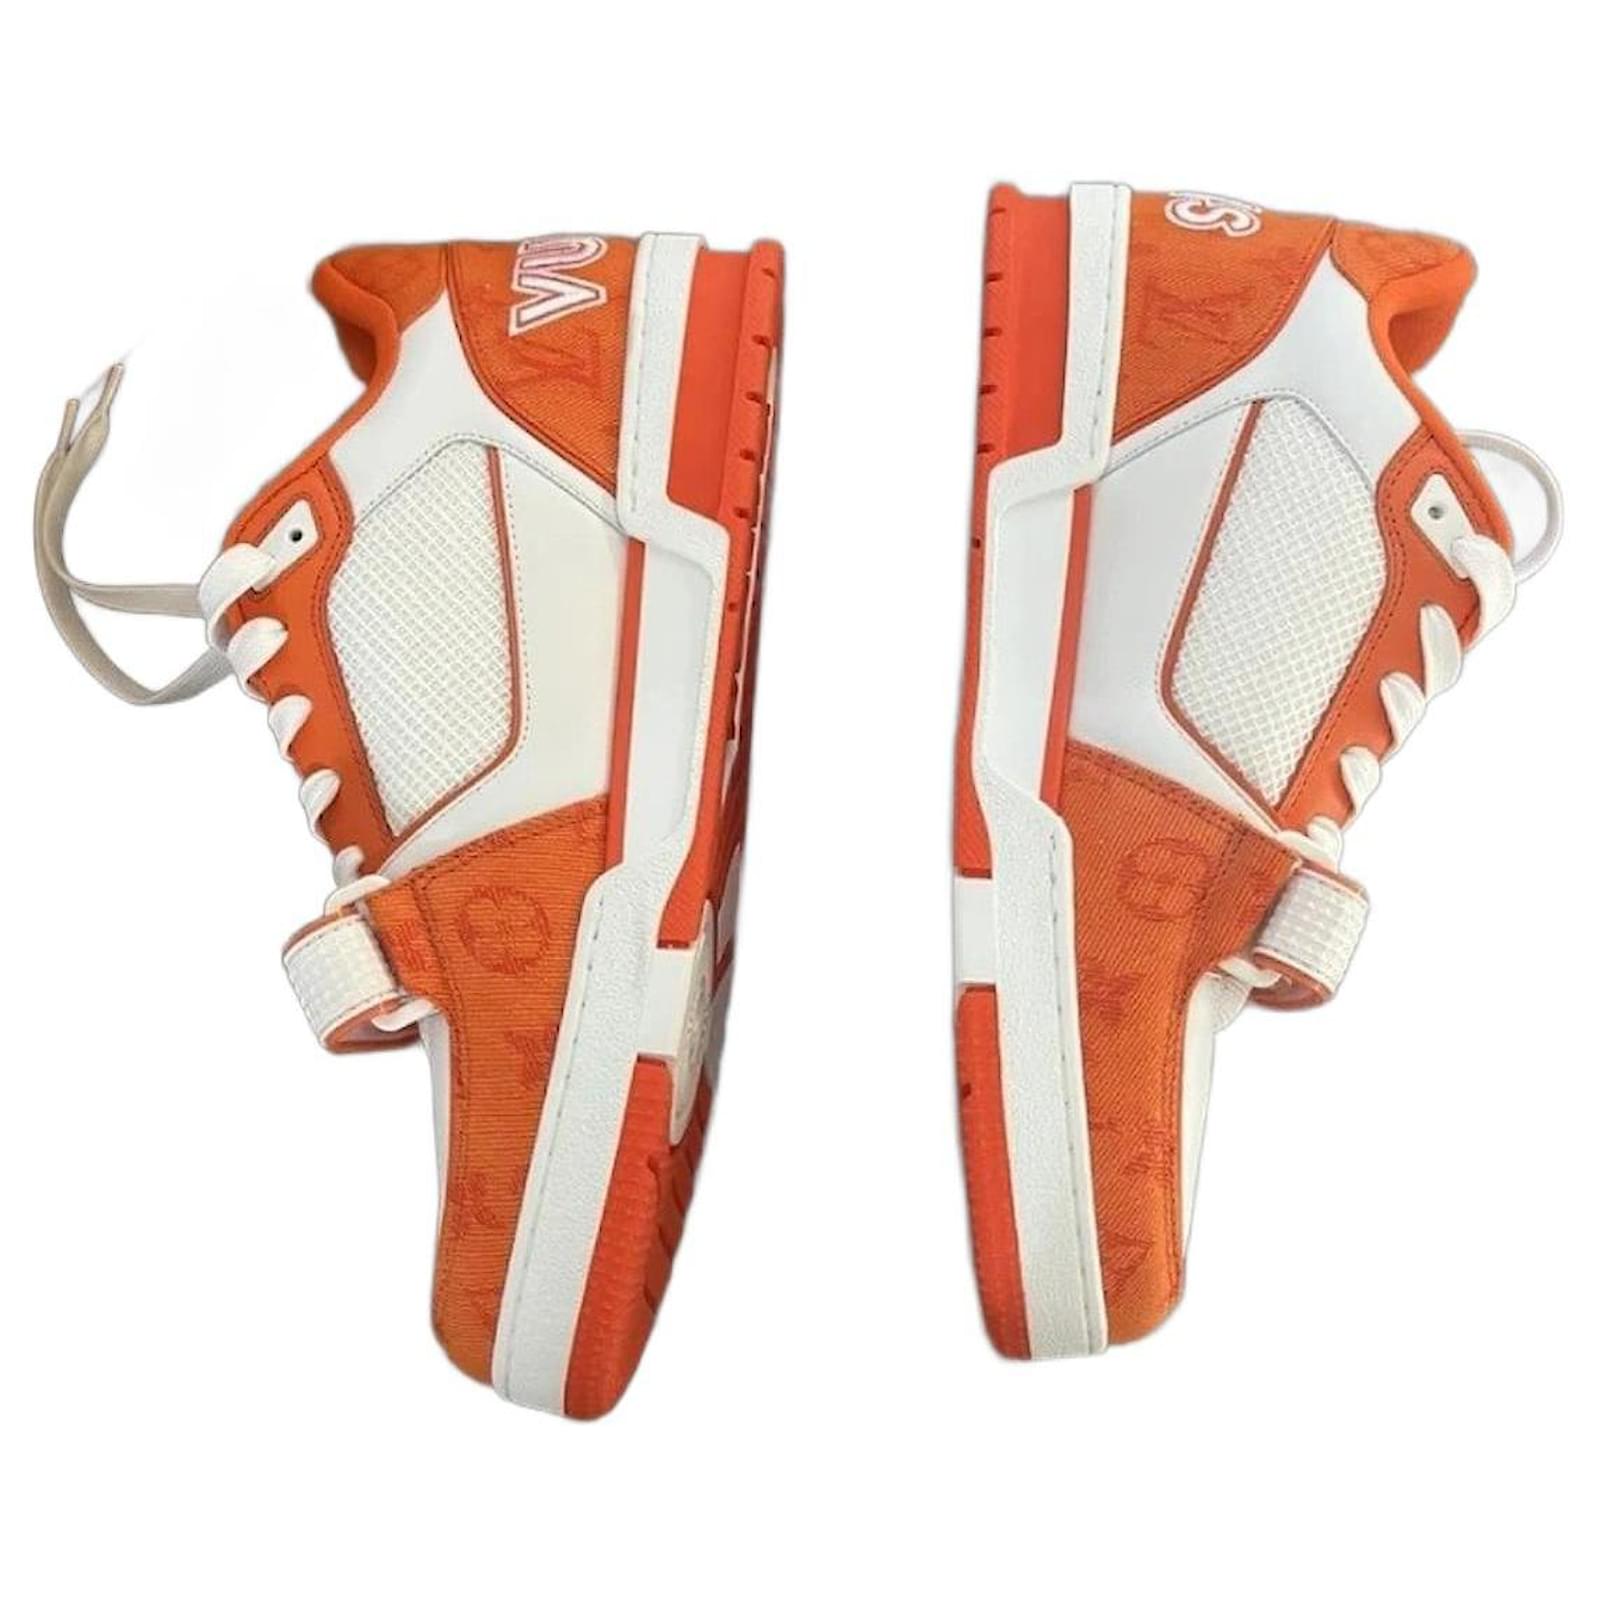 Louis Vuitton LV Trainer Sneaker in Orange